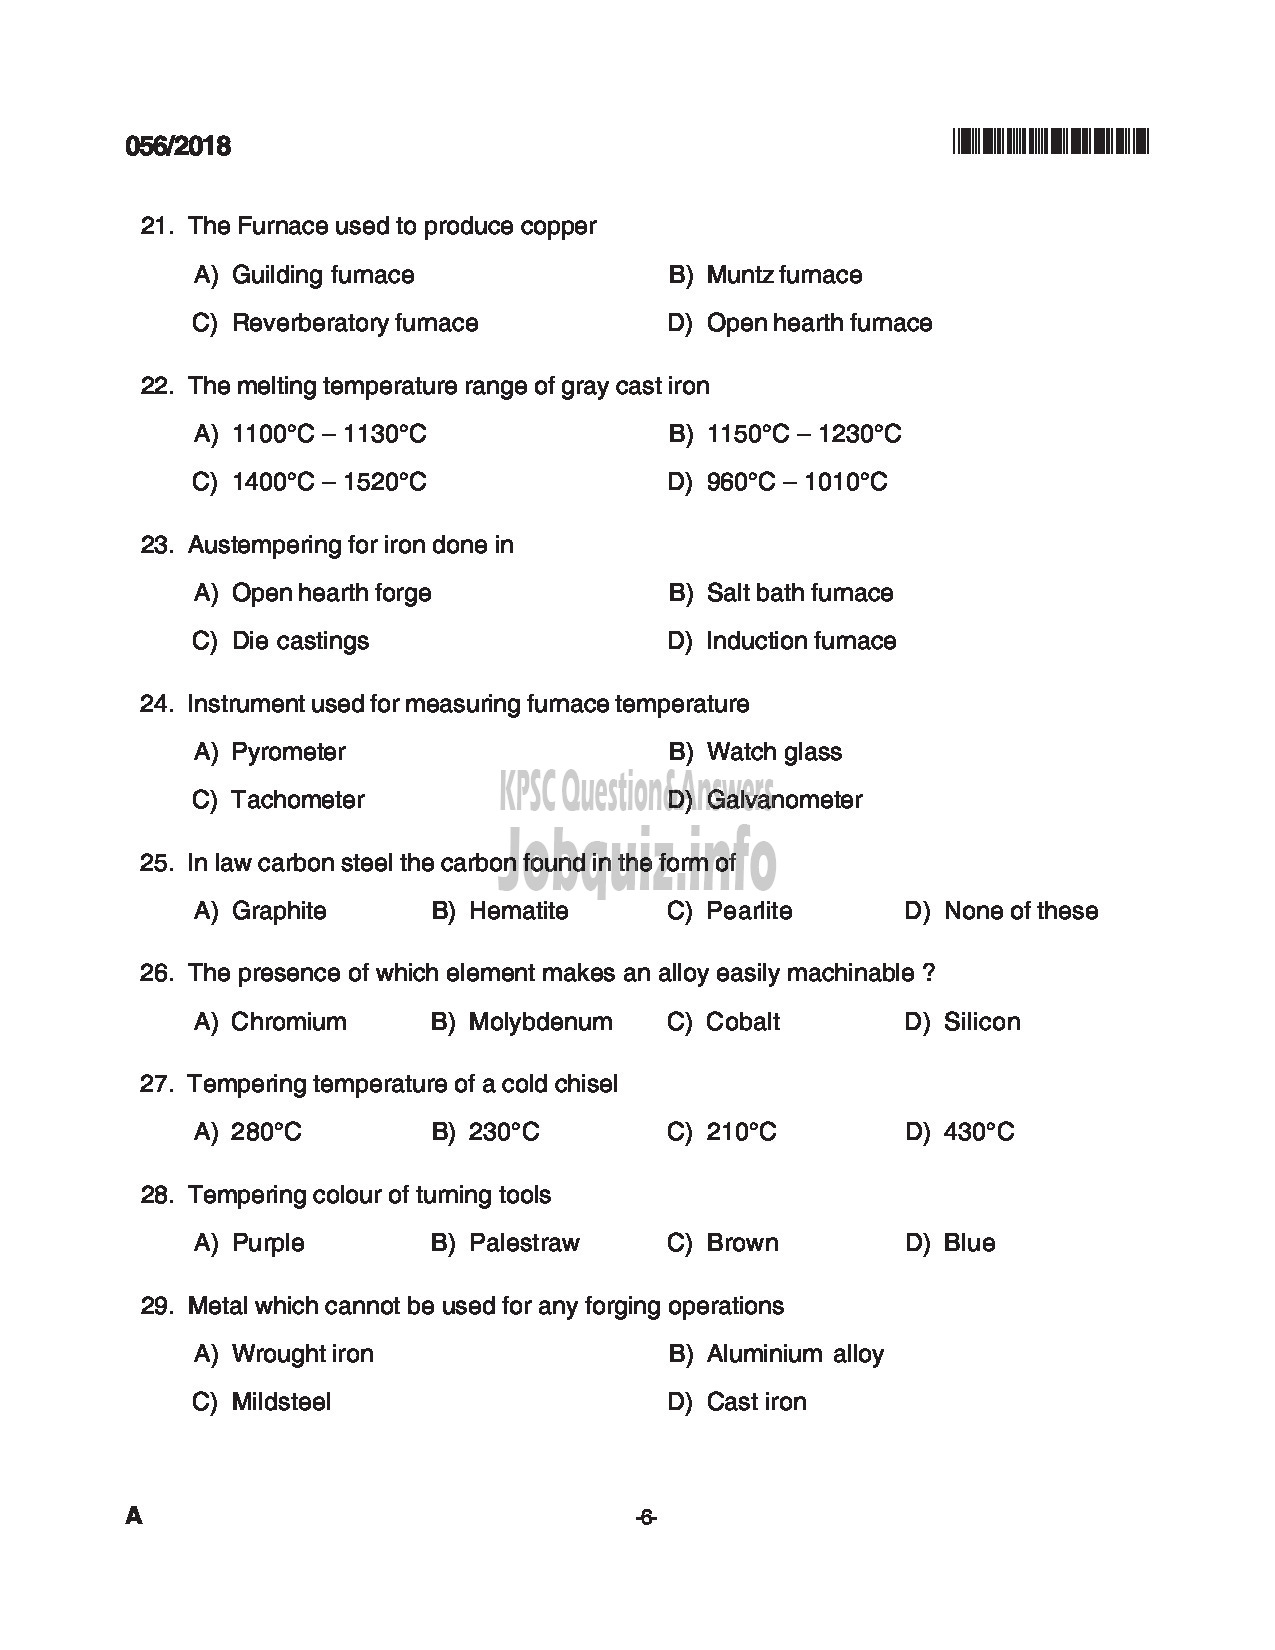 Kerala PSC Question Paper - BLACKSMITH-6